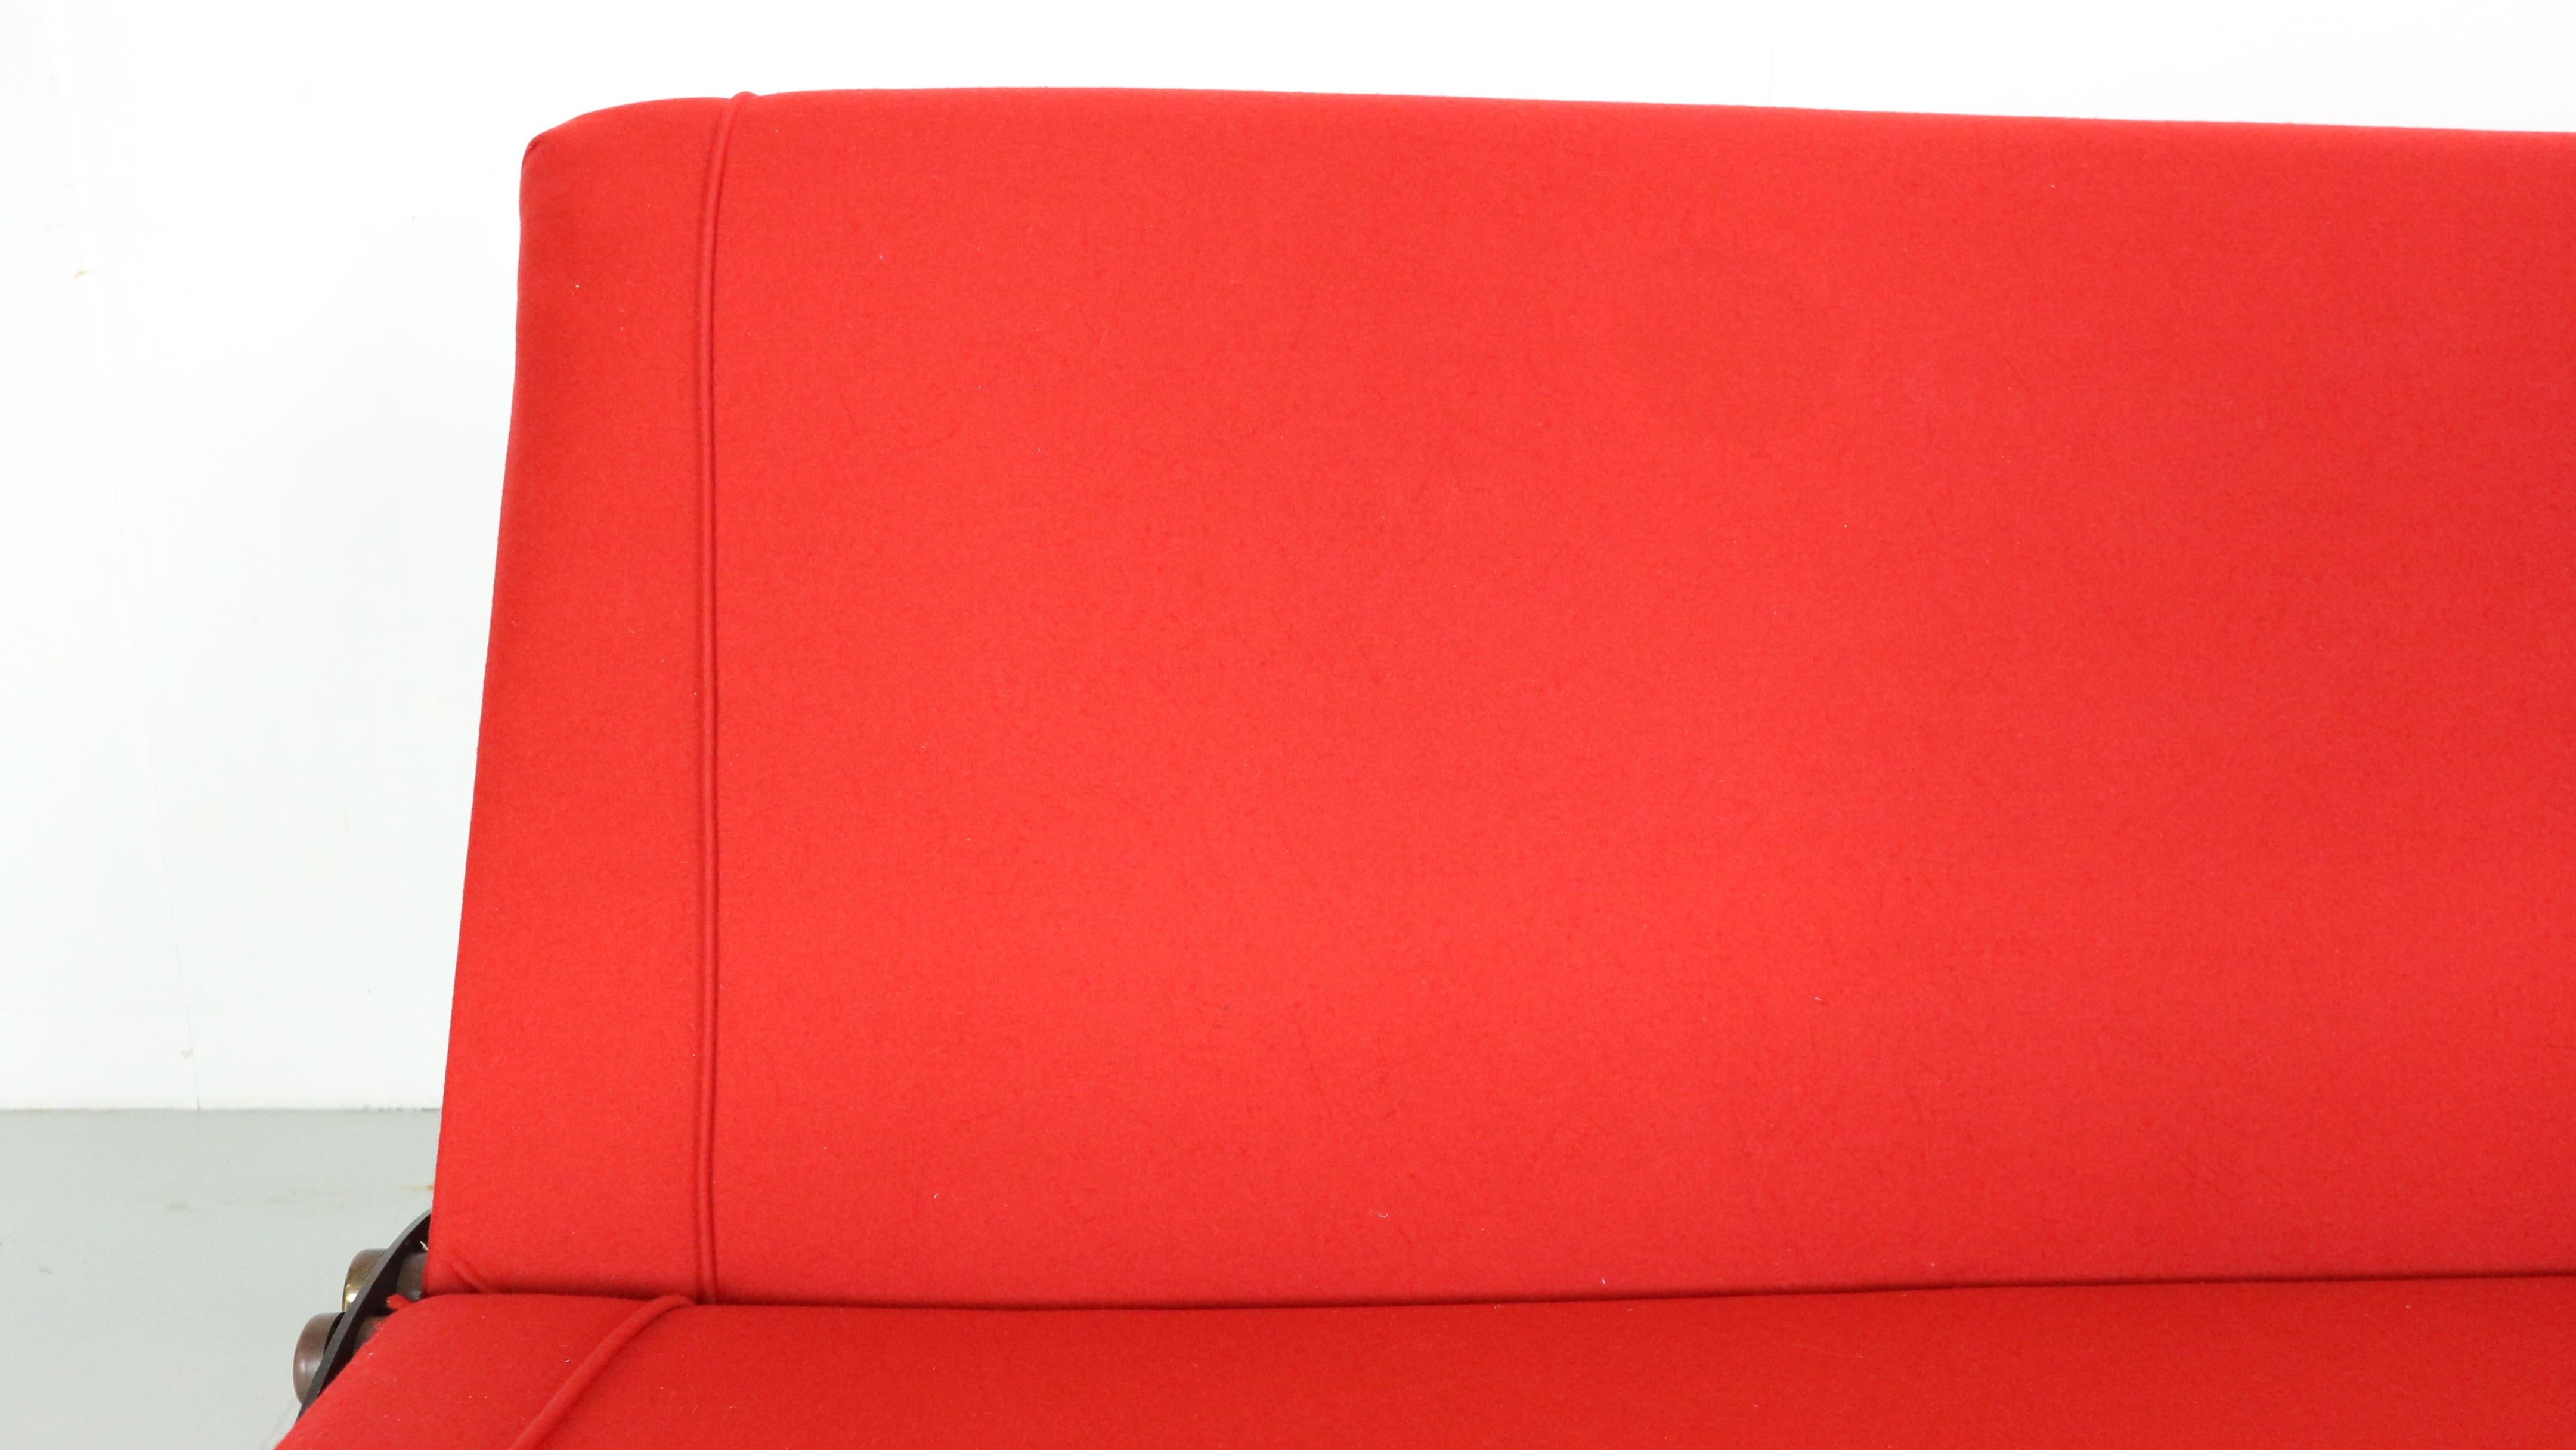 Osvaldo Borsani Original 'D70' Sofa/Daybed for Tecno, 1954 Italy For Sale 3